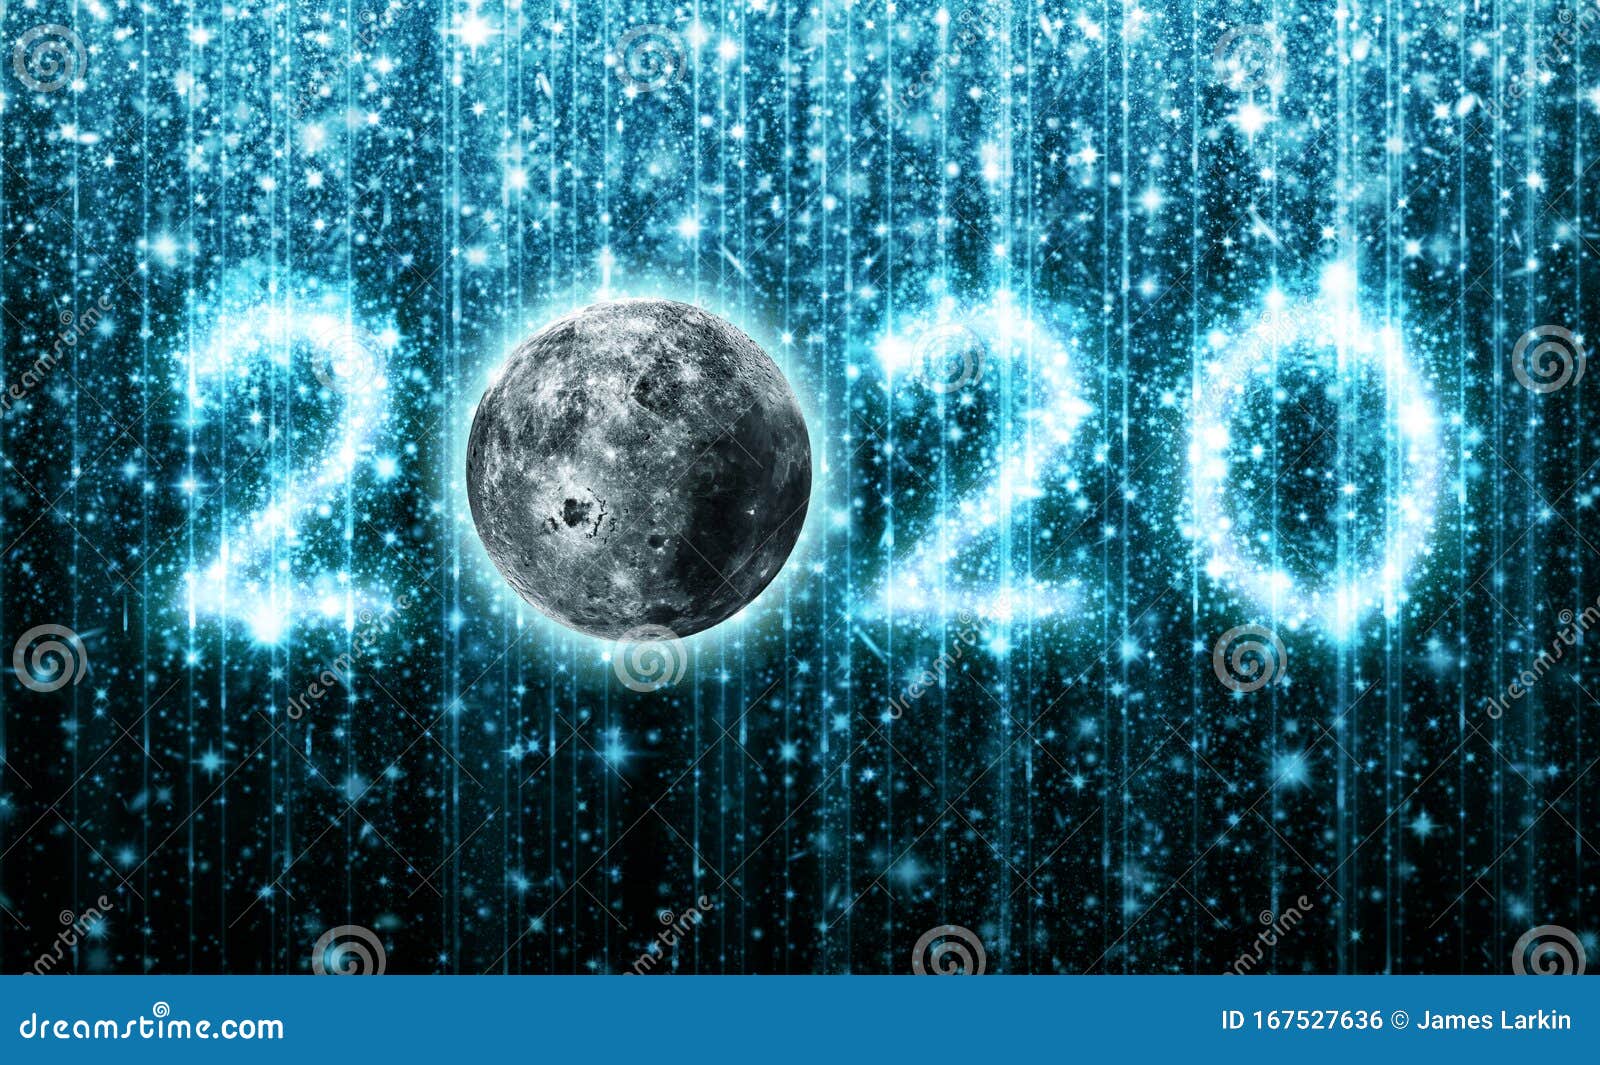 2020-moon-phases-calendar-white-astronomy-vector-chart-cartoondealer